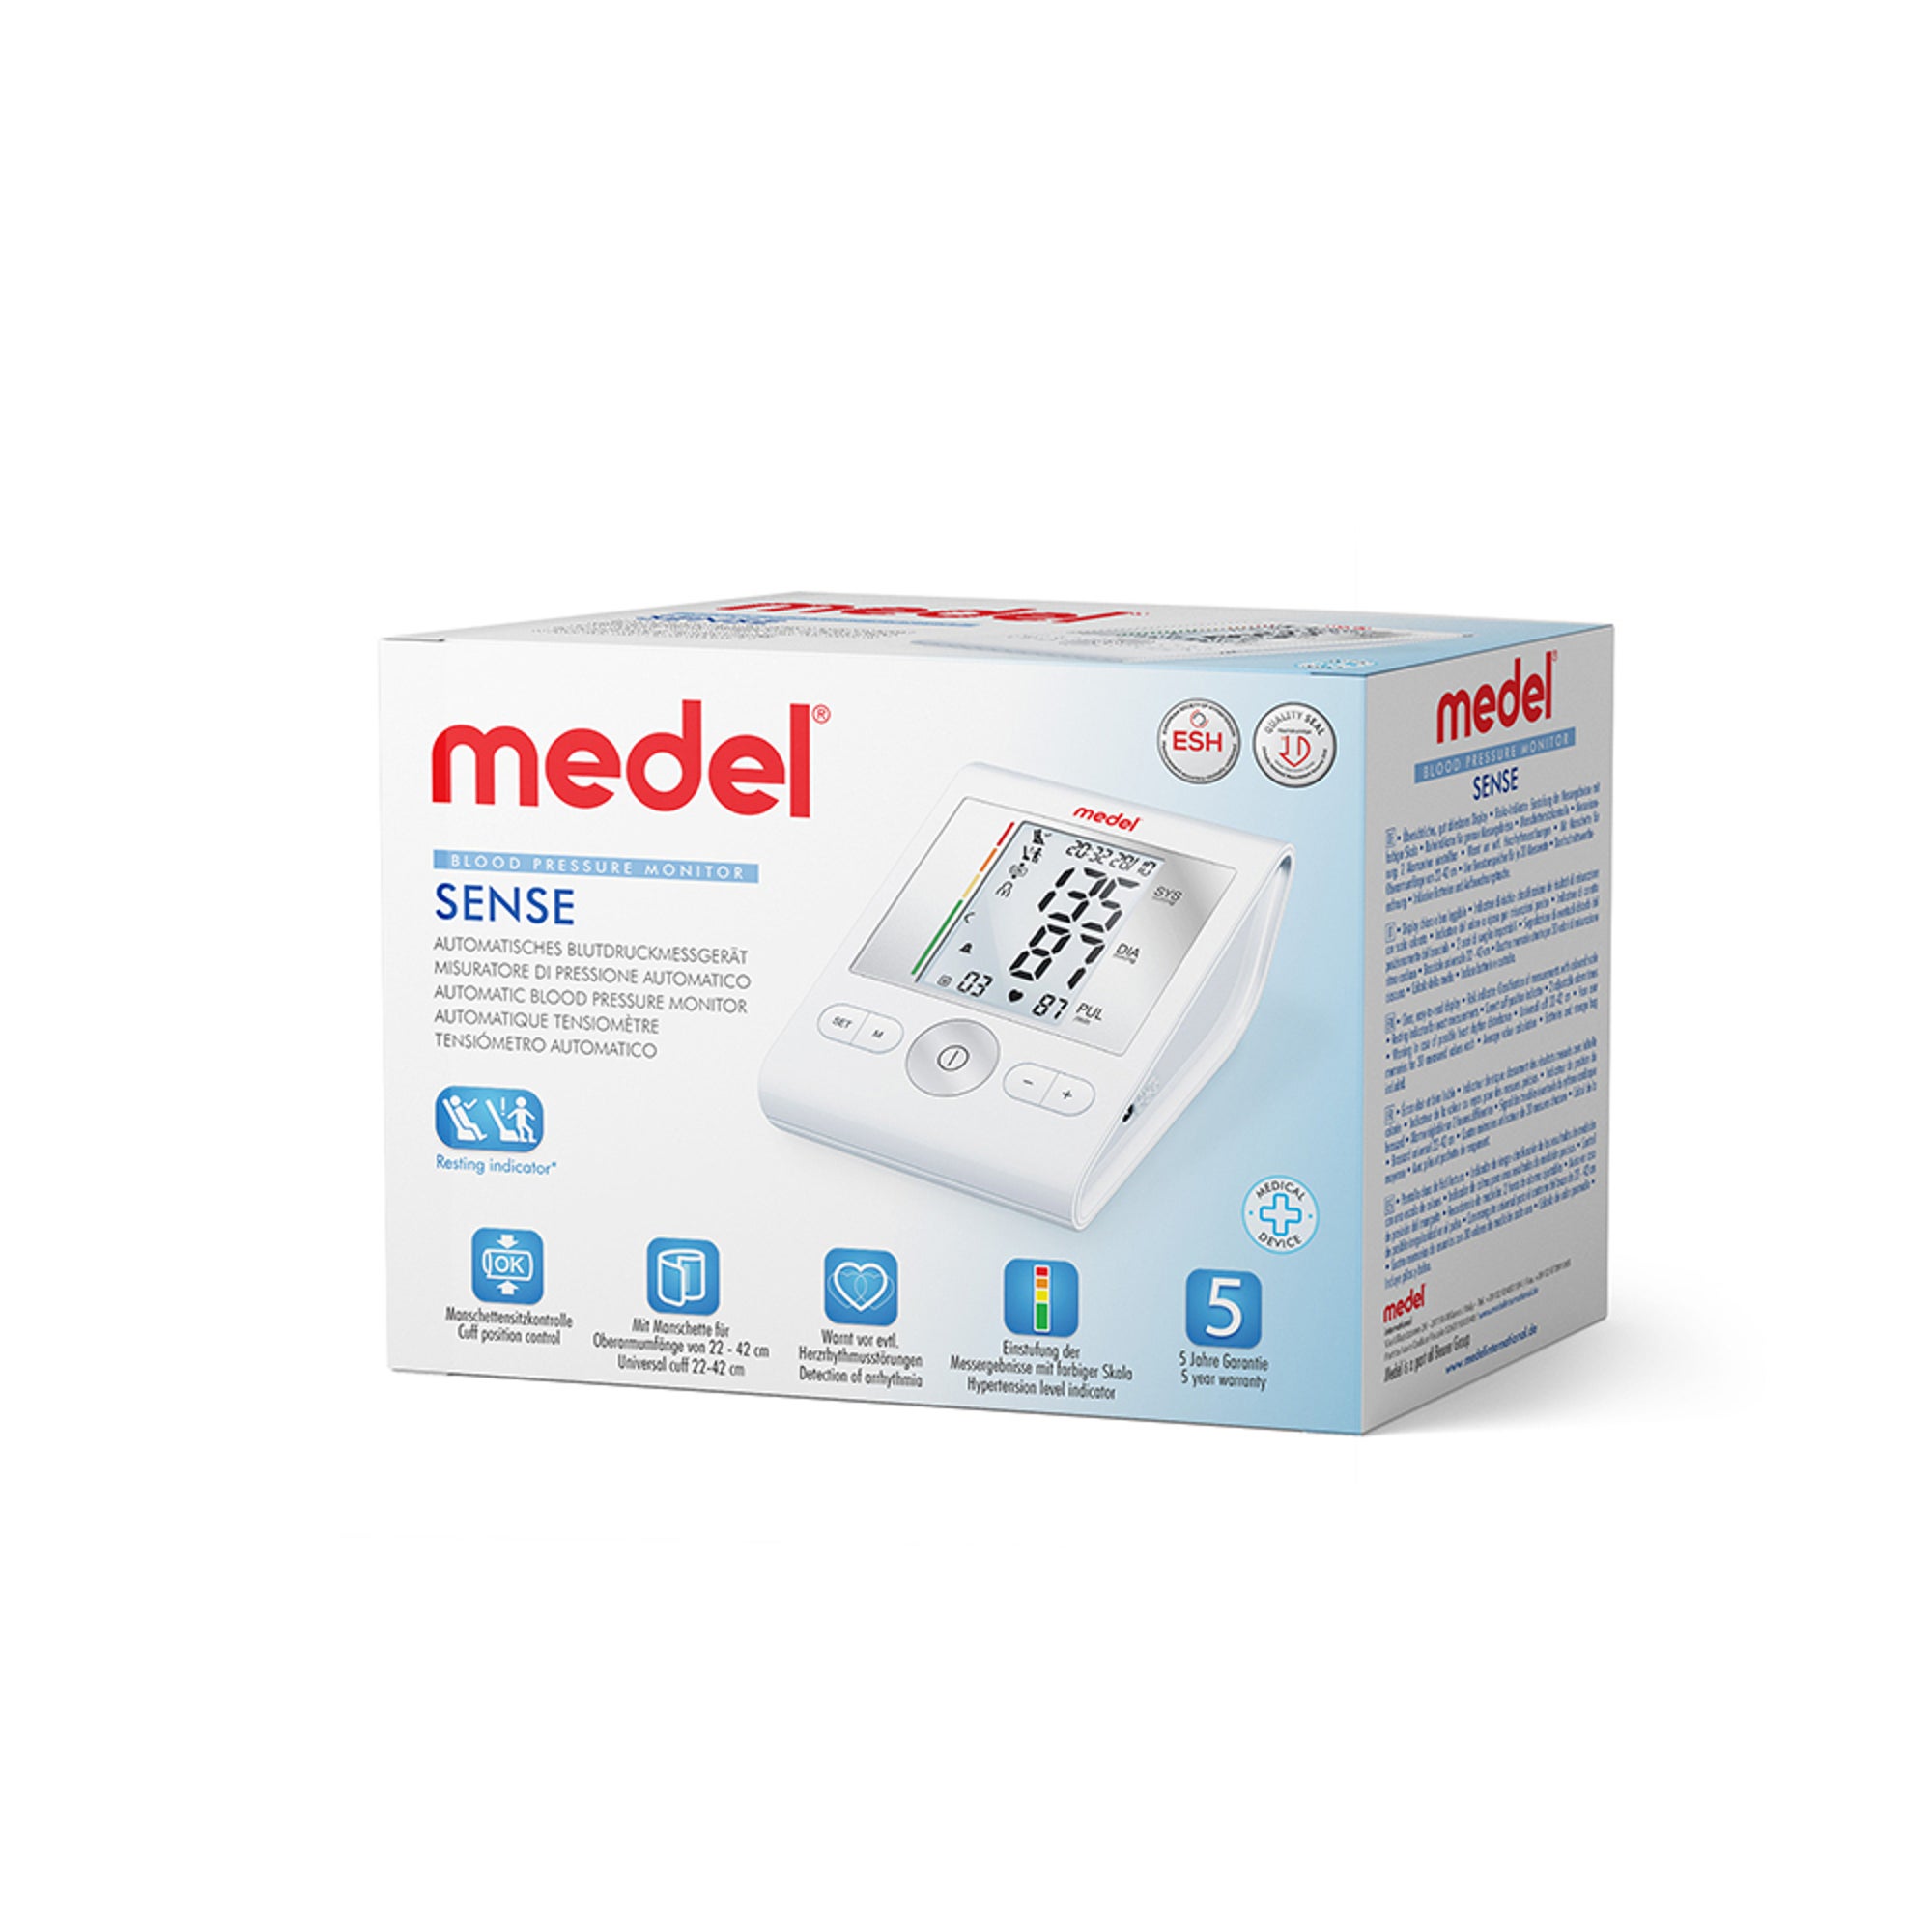 Medel Sense Oberarm-Blutdruckmessgerät | DocMorris mit online St. kaufen Ruheindikator, 1